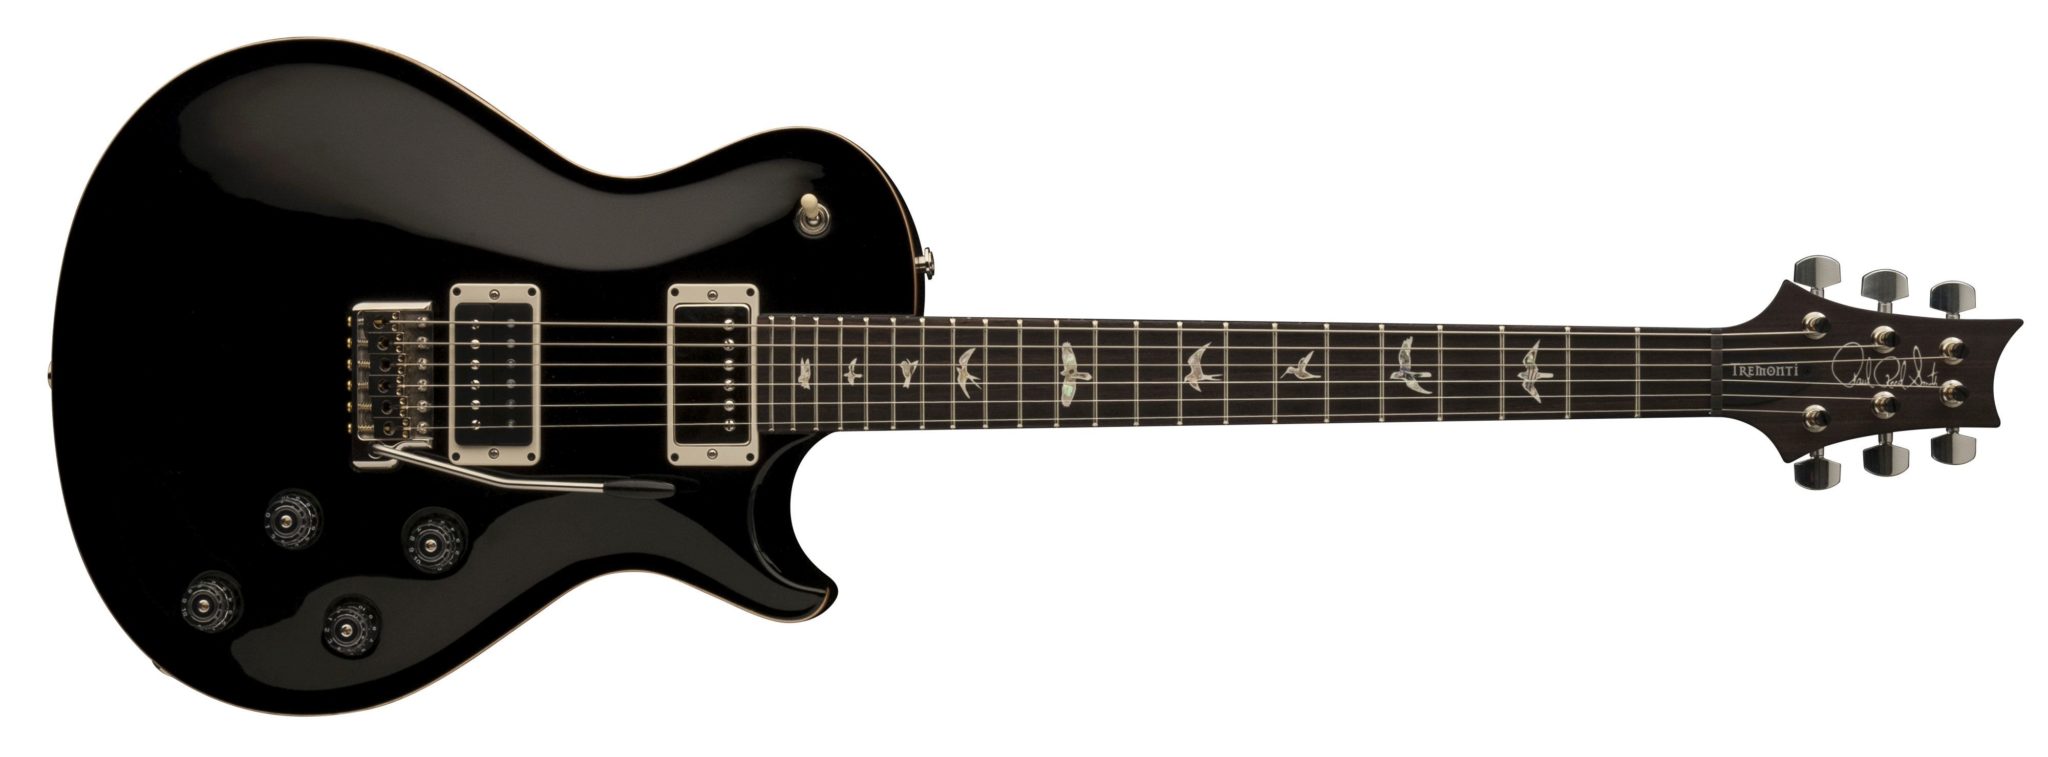 PRS Tremonti E-Gitarre in der Farbe schwarz.